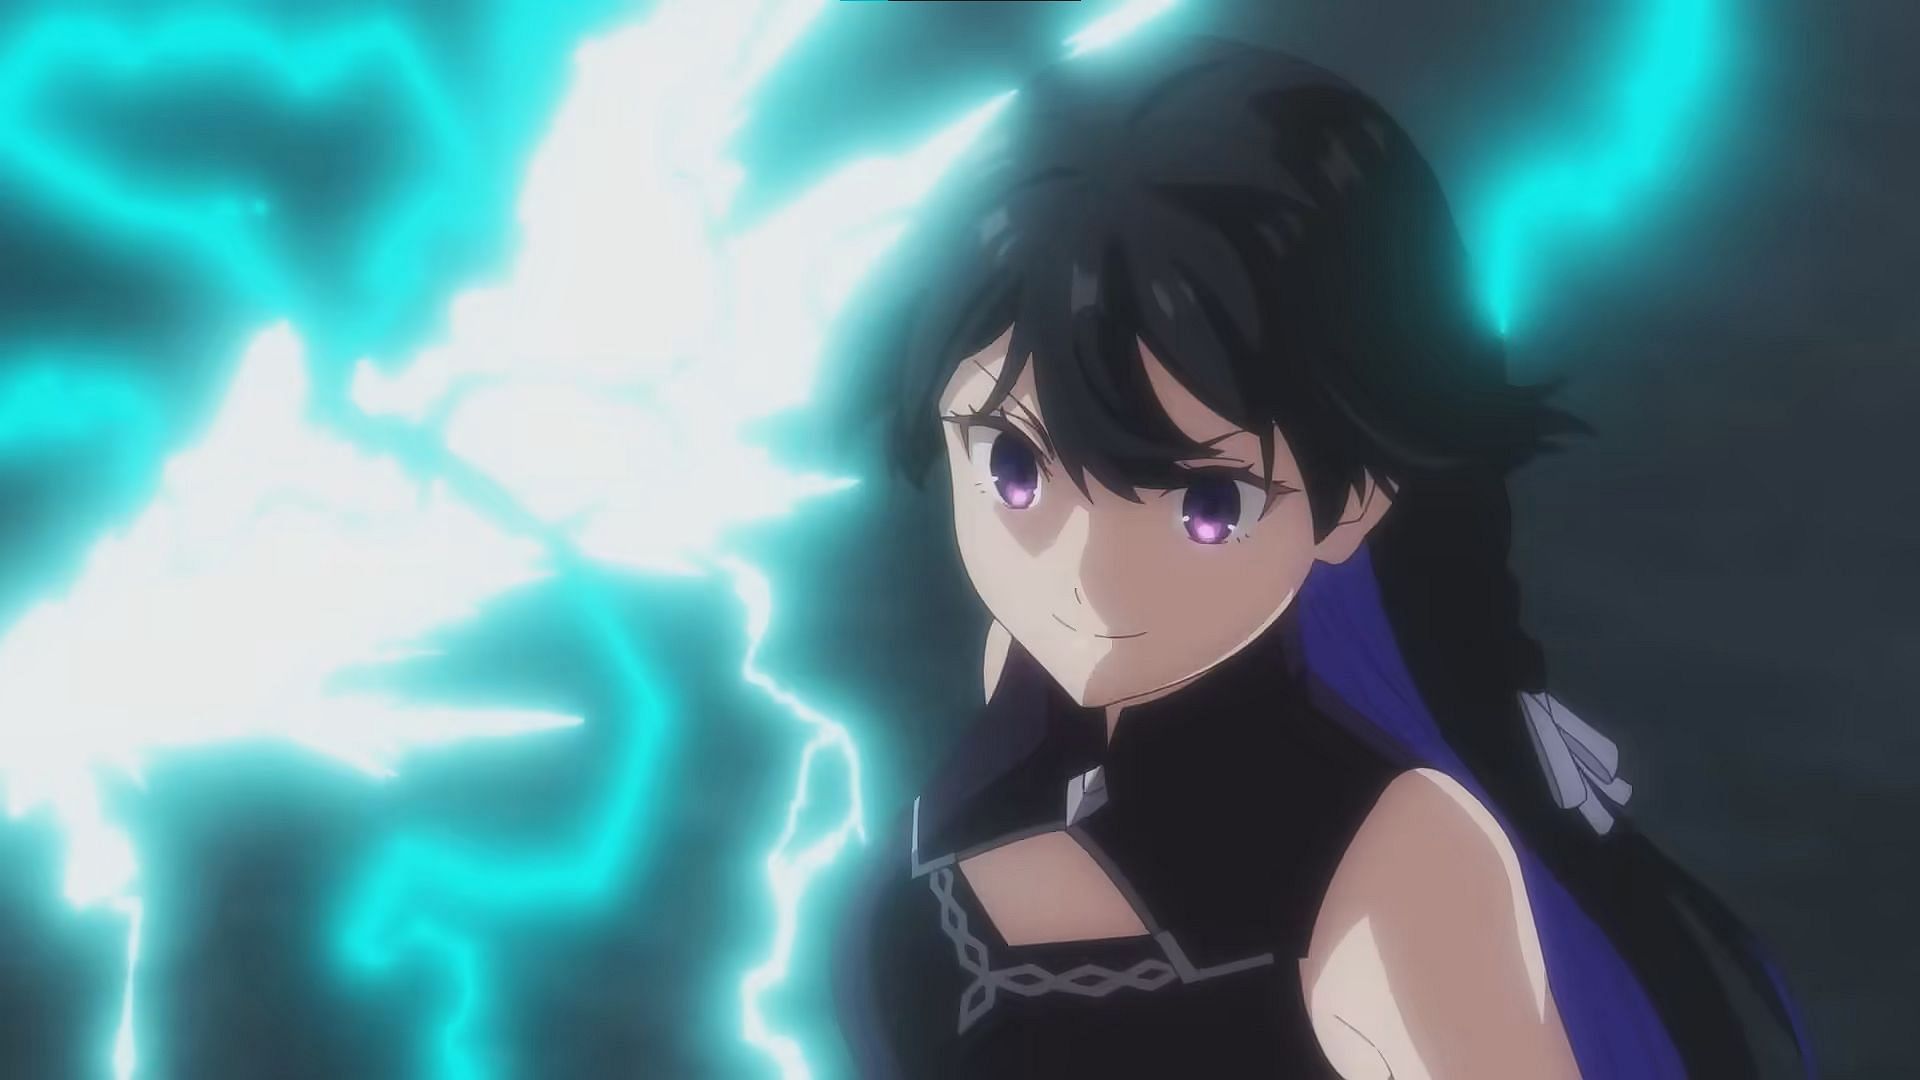 Tinasha as shown in the anime (Image via Studio ENGI)